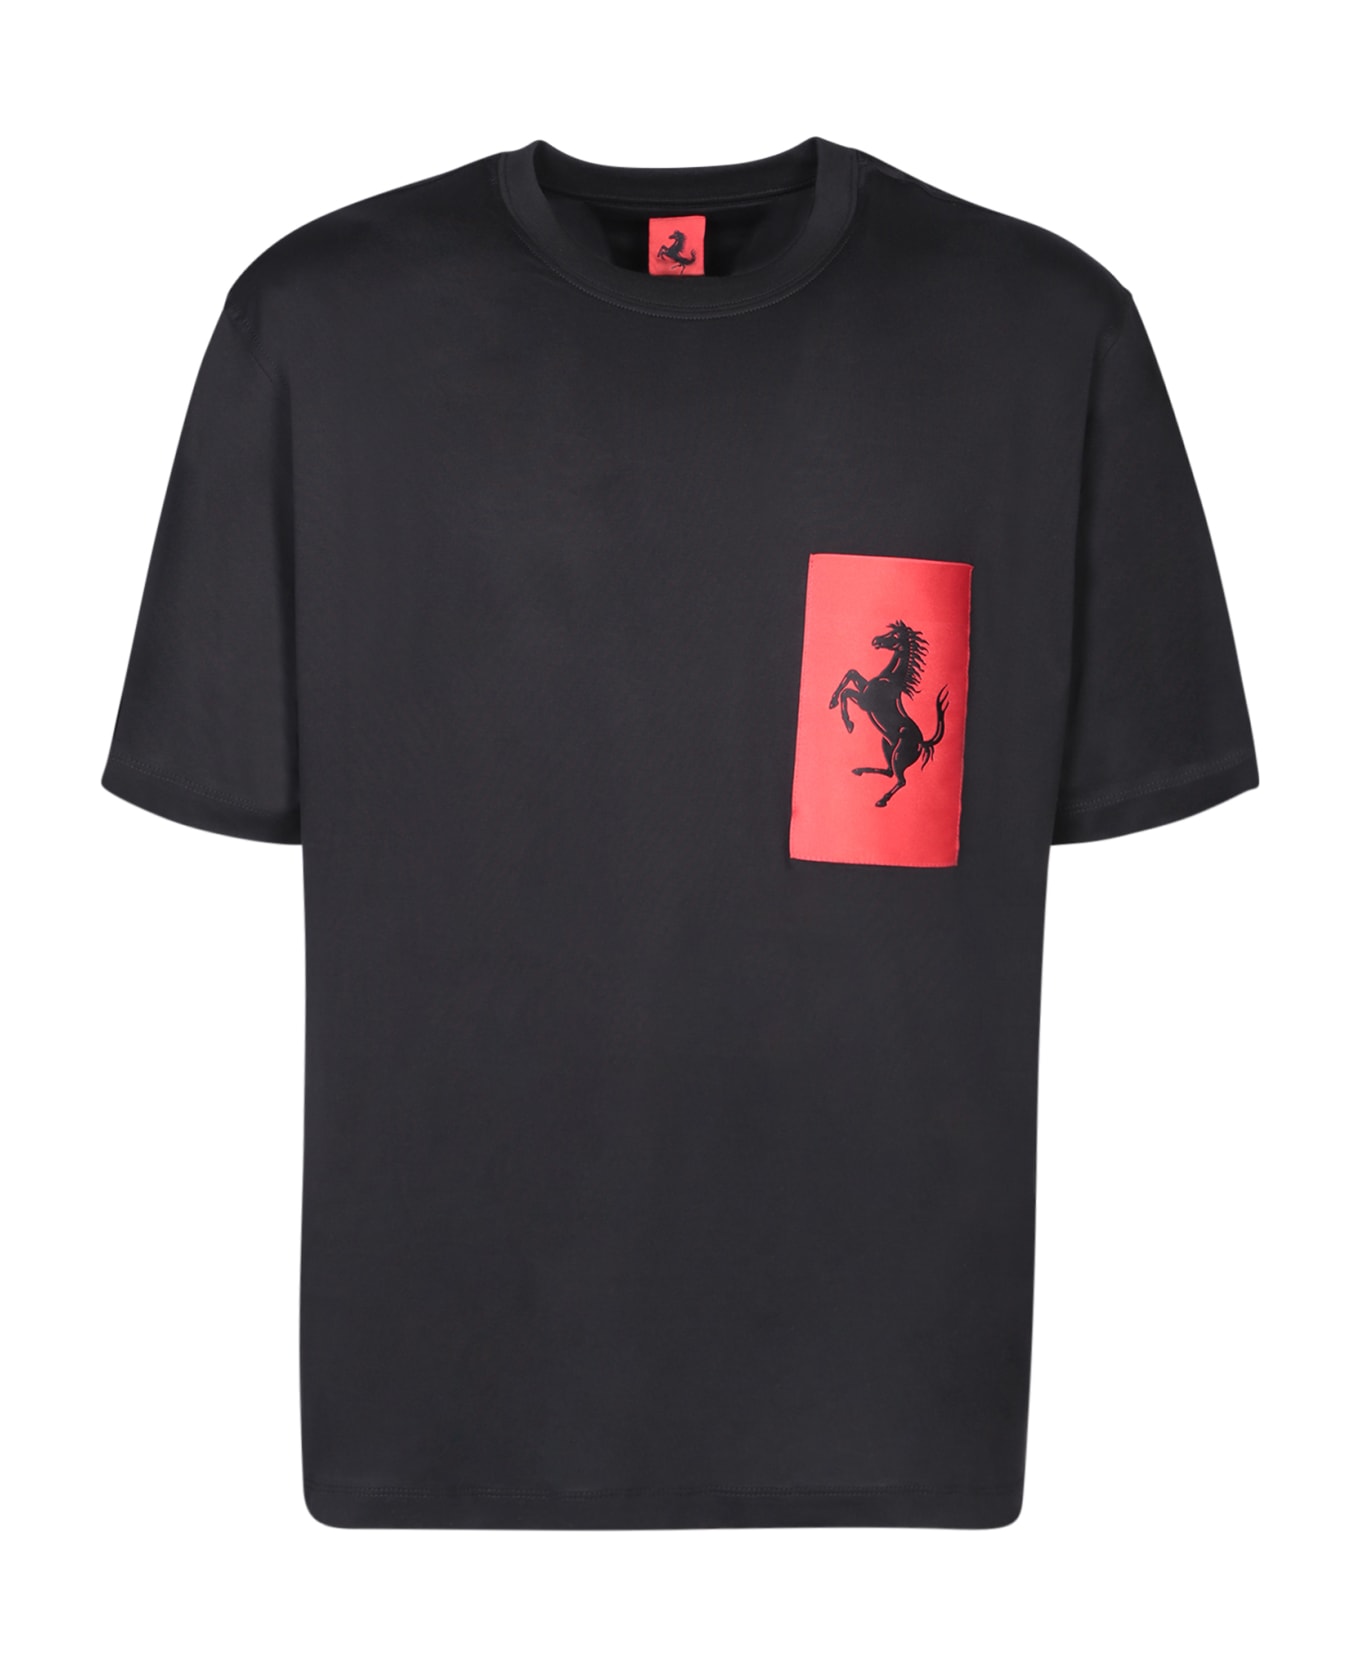 Ferrari Cavallino Rampante Chest Black T-shirt - Red